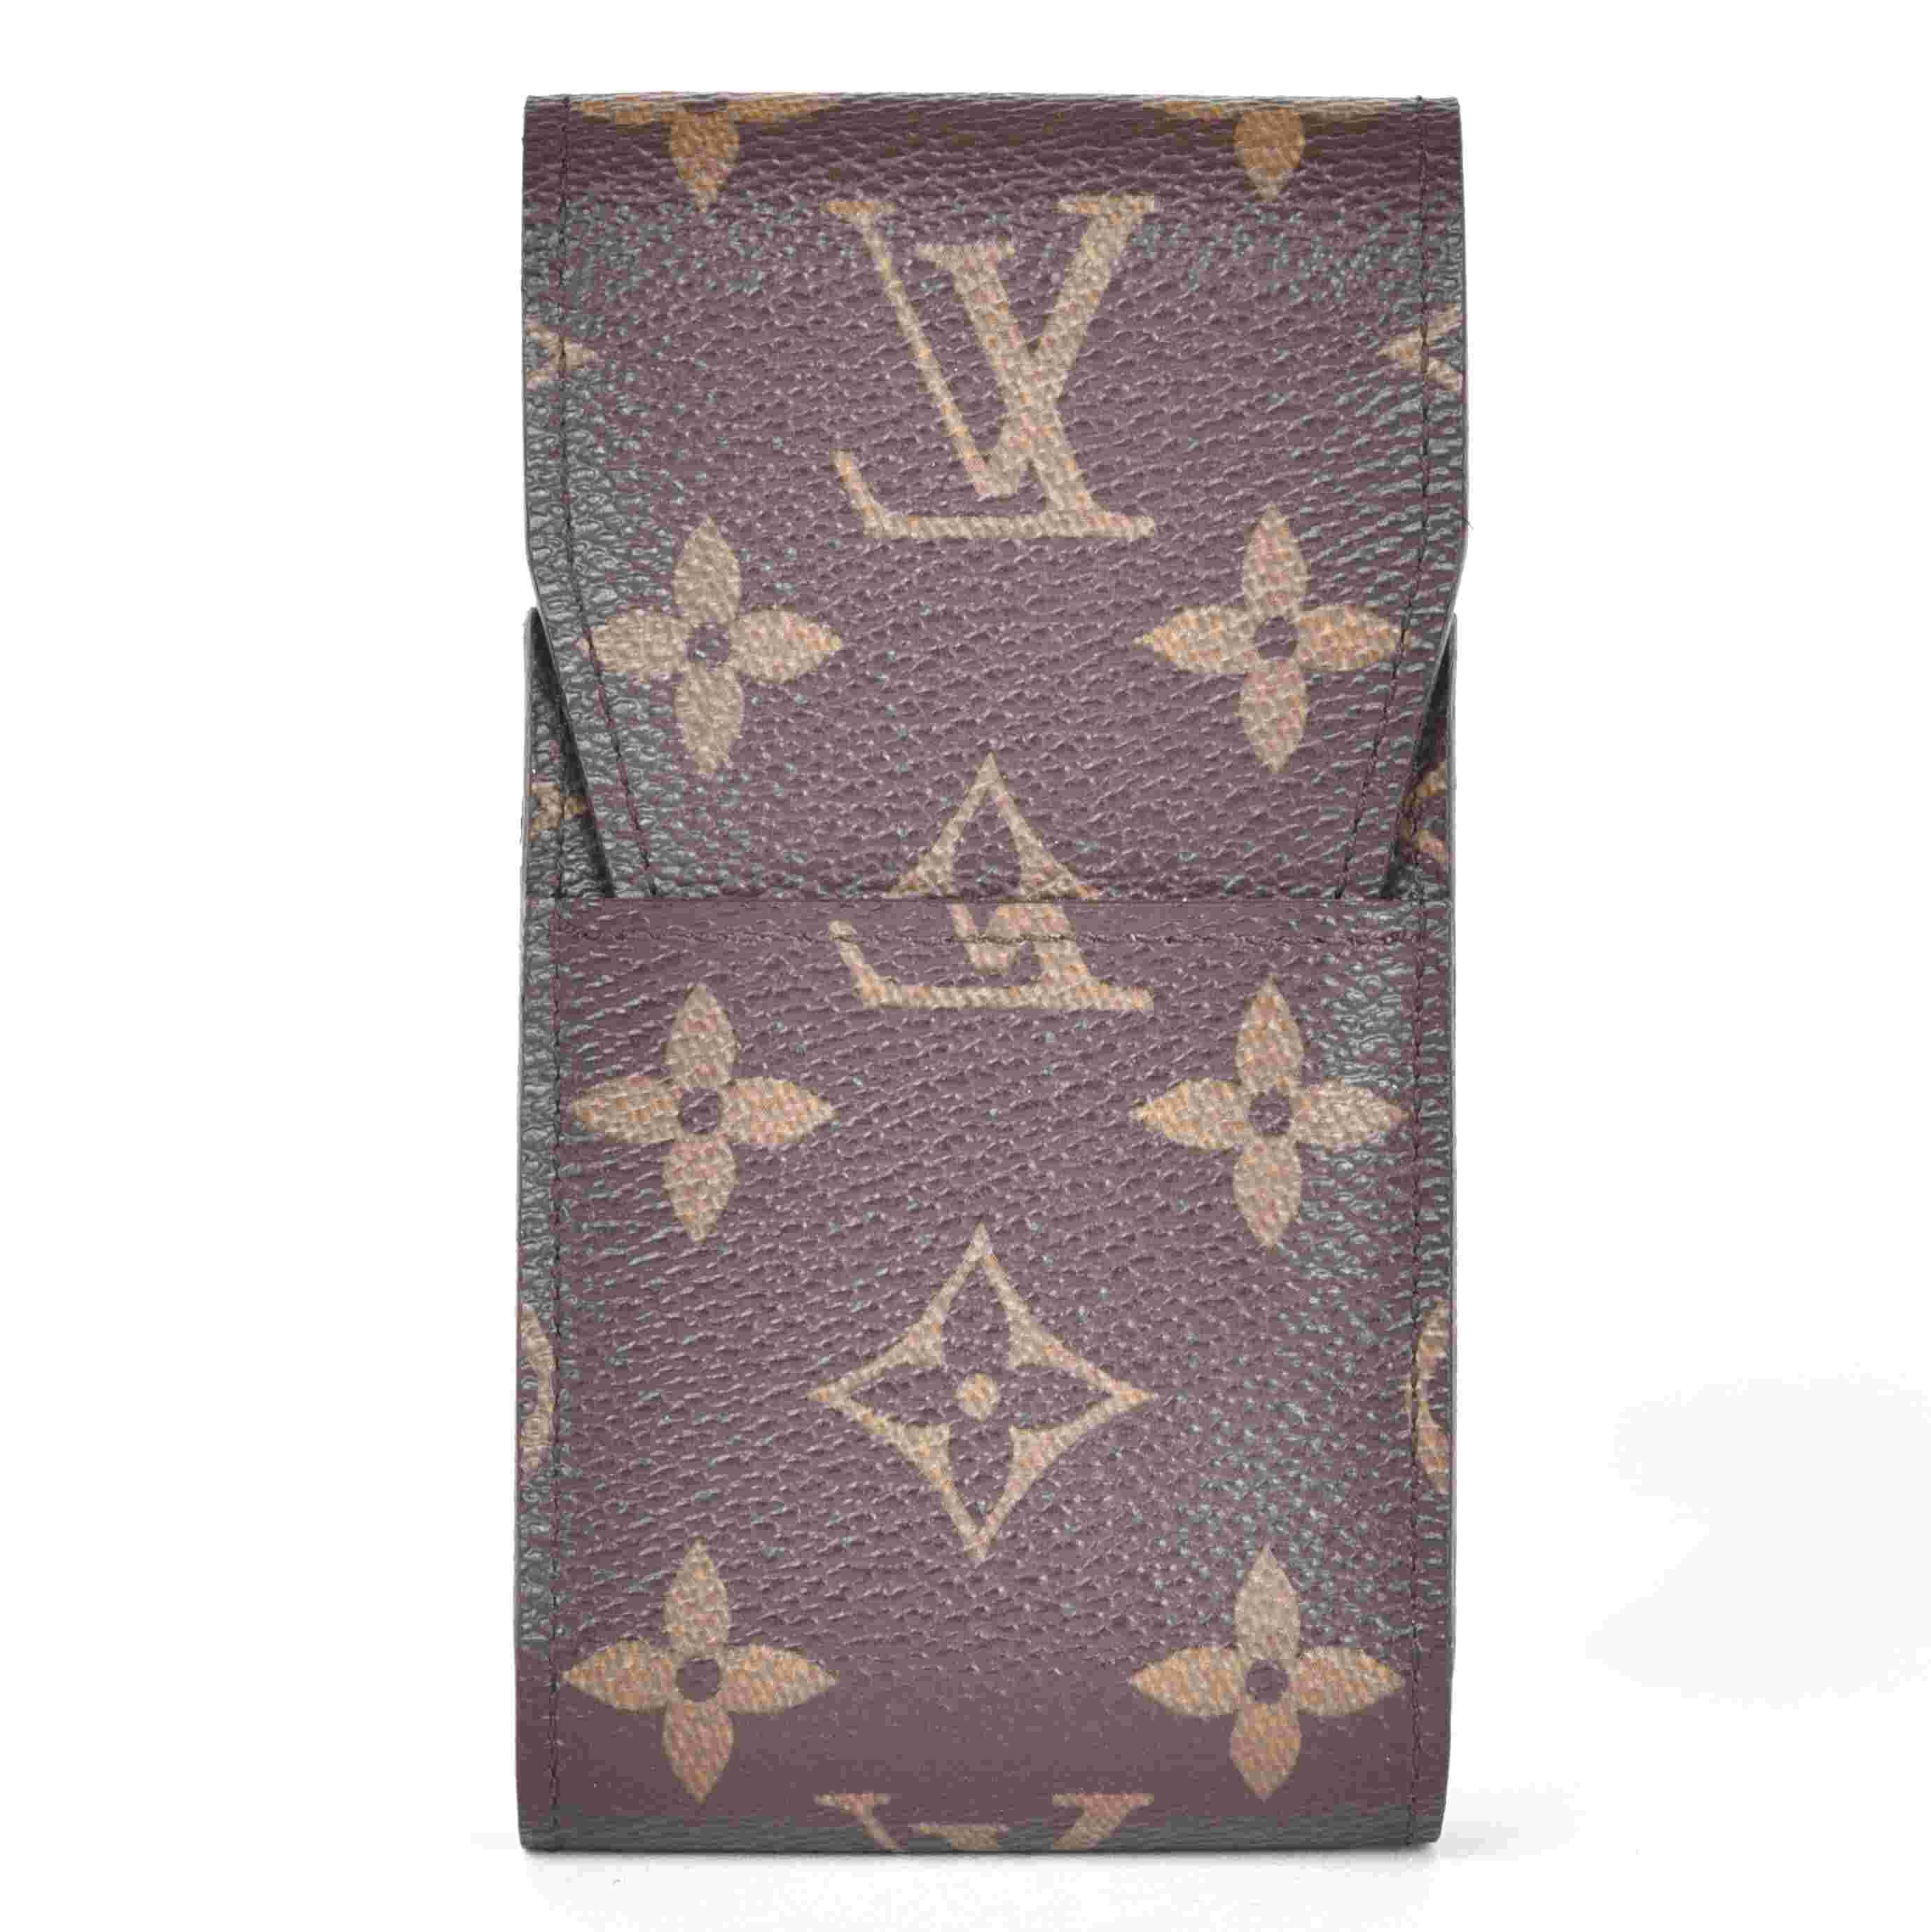 Louis Vuitton - Etui iPad Tablet Case Pouch - Catawiki